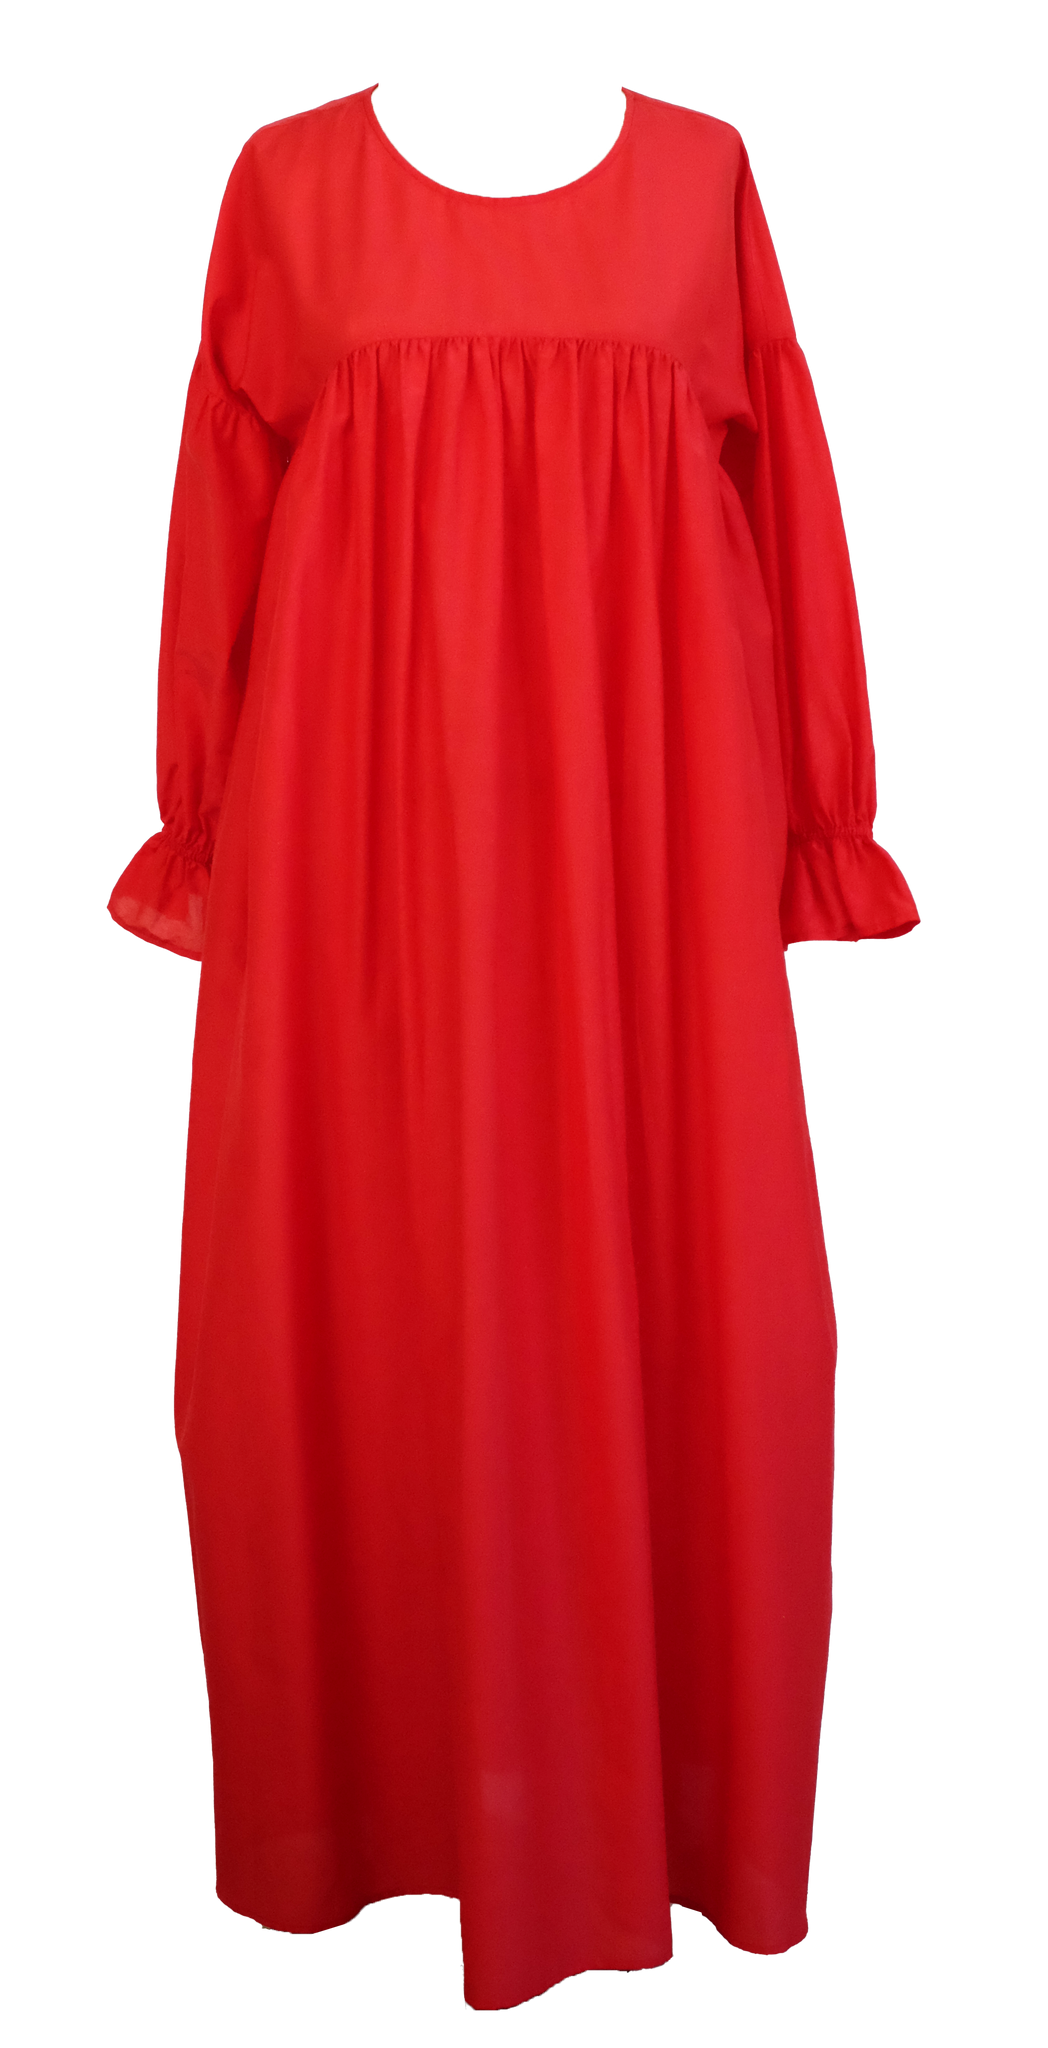 Phoebe Dress in Crimson- Size Small/Medium SAMPLE